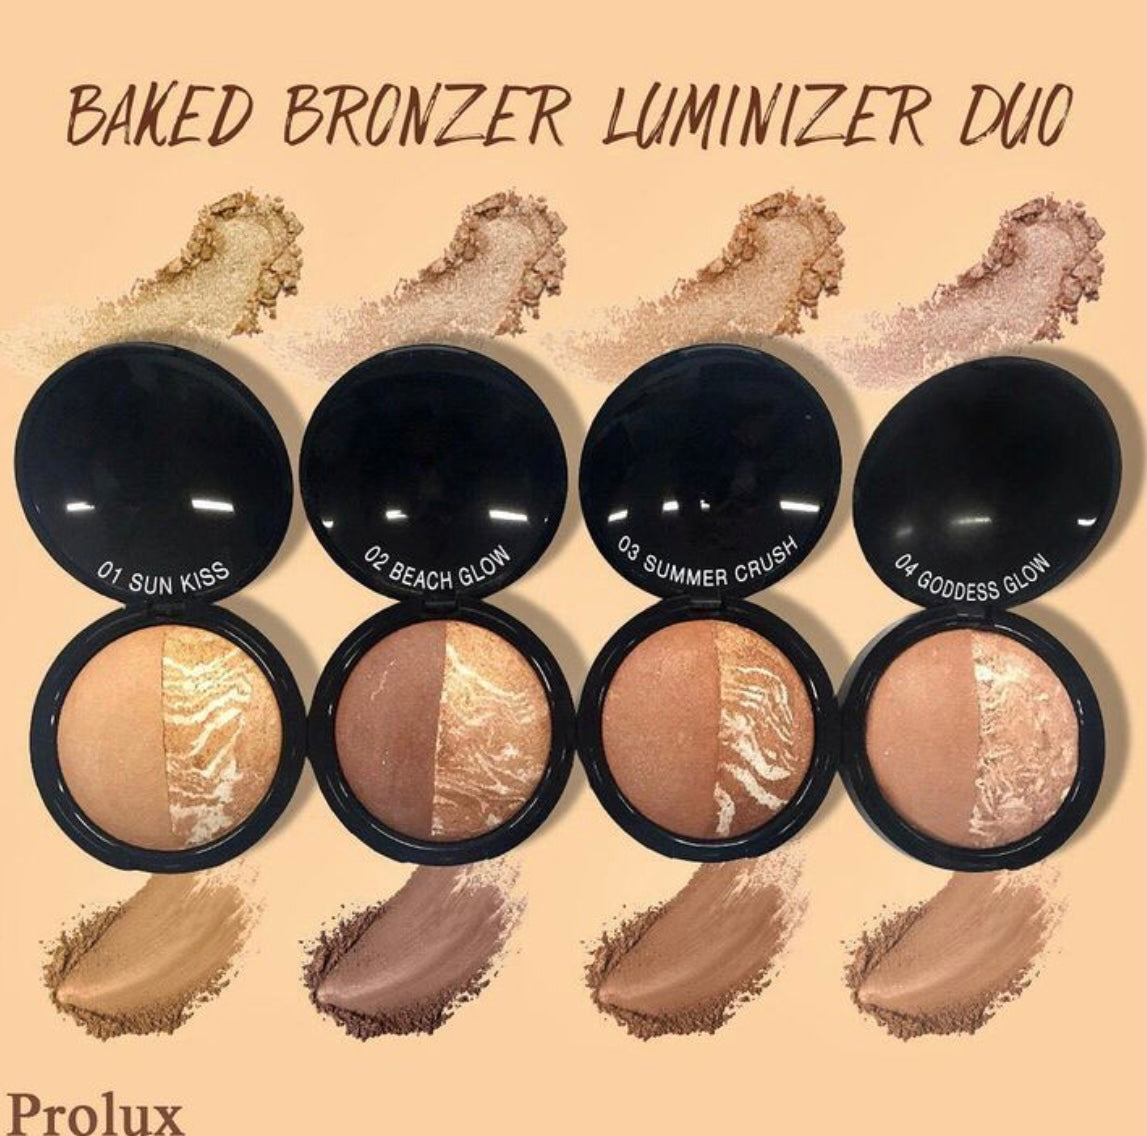 Prolux Baked Bronzer Luminizer Duo